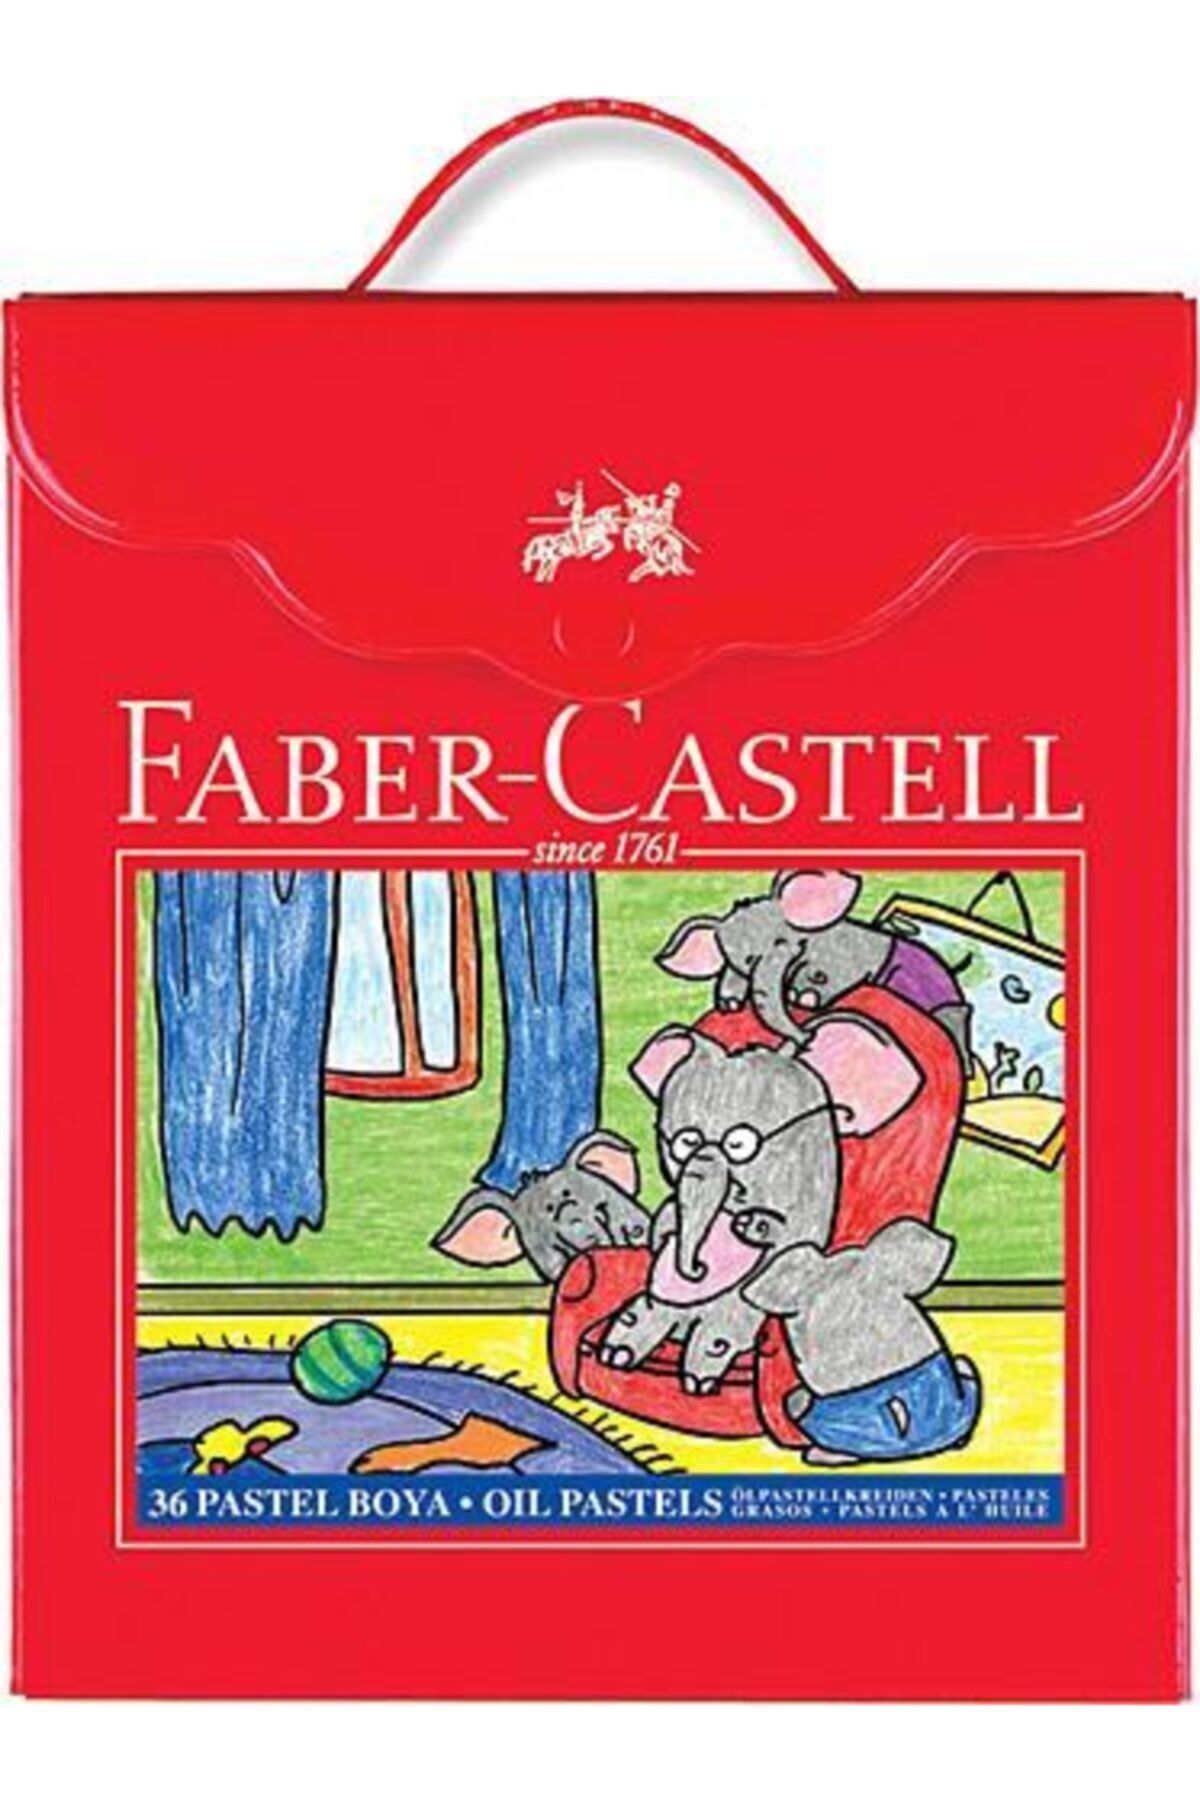 Faber Castell Faber-castell Pastel Boya Çantalı Köşeli 36 Renk 5281 125137